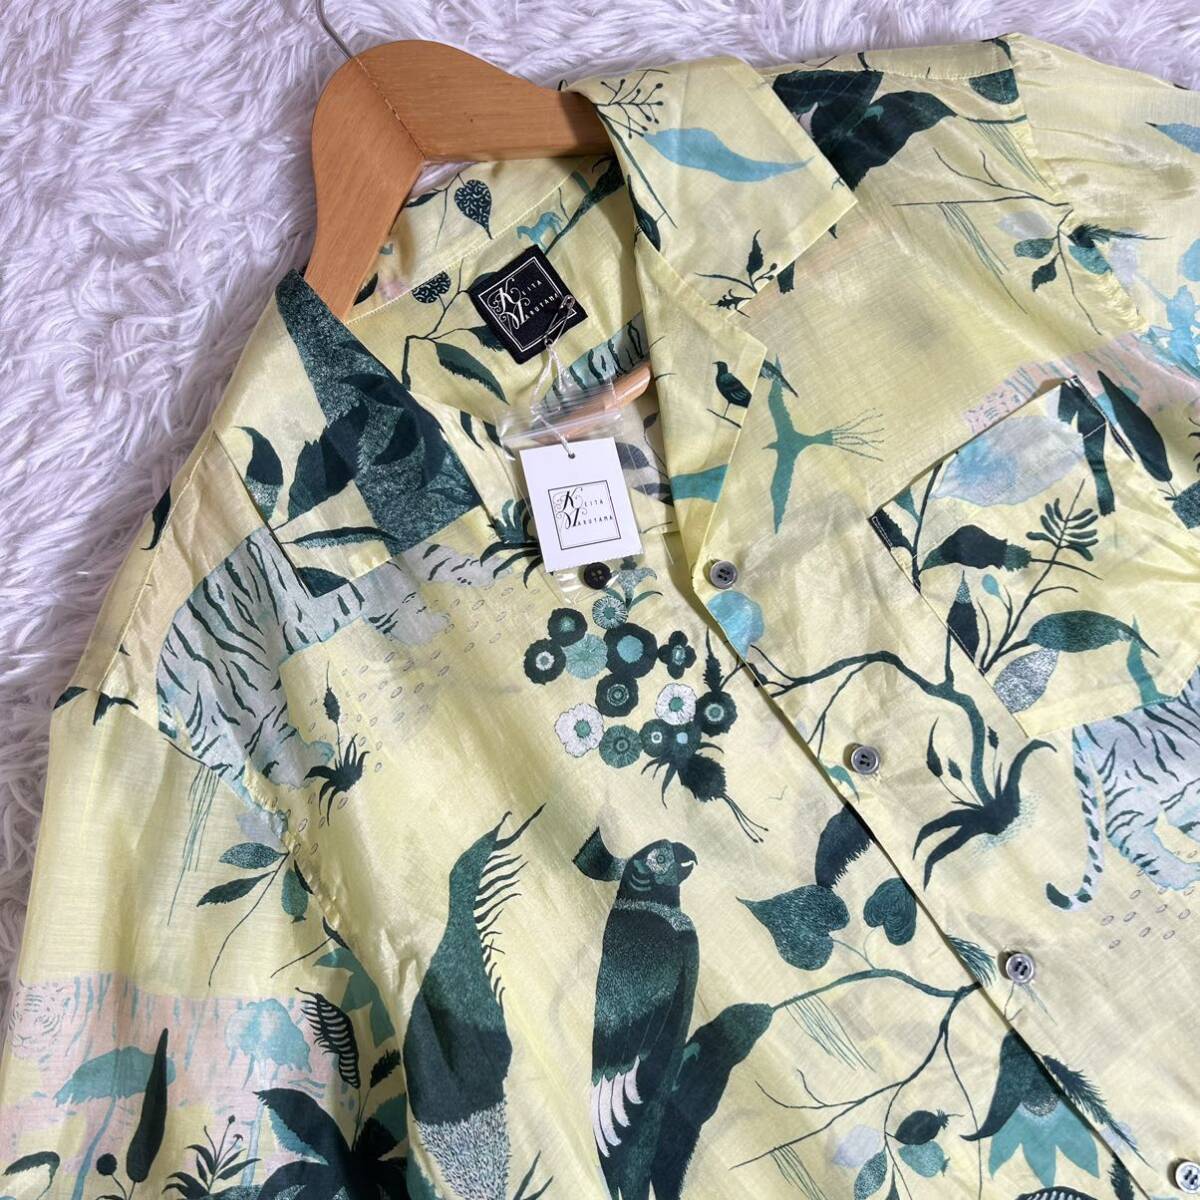  as good as new [ unused ]KEITA MARUYAMA Keita Maruyama short sleeves shirt open color total pattern animal pattern . pattern yellow 01 size cupra material 